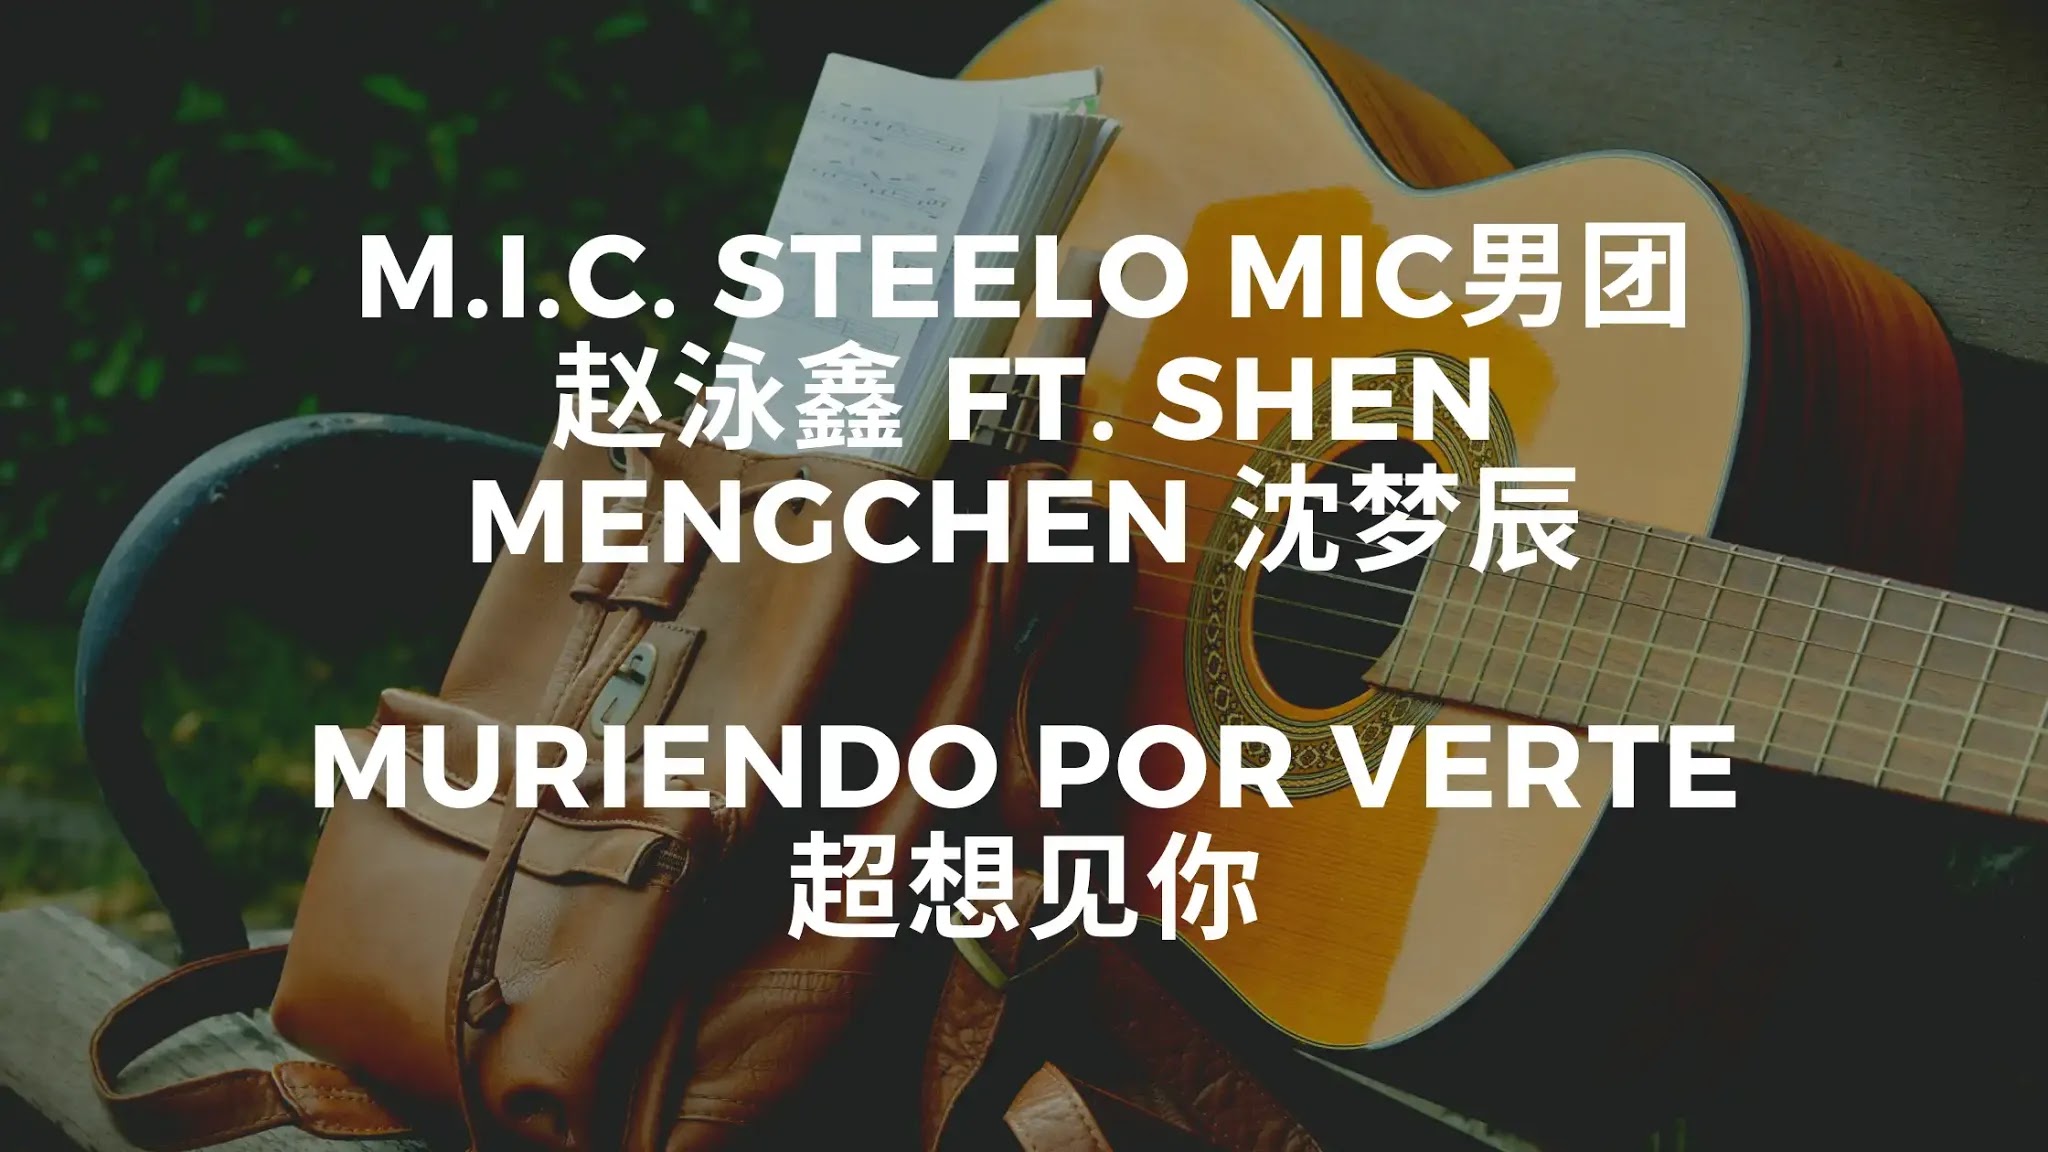 Aprende cantando: Muriendo por verte - M.I.C. Steelo ft. Shen MengChen [ES/CH/Pinyin]